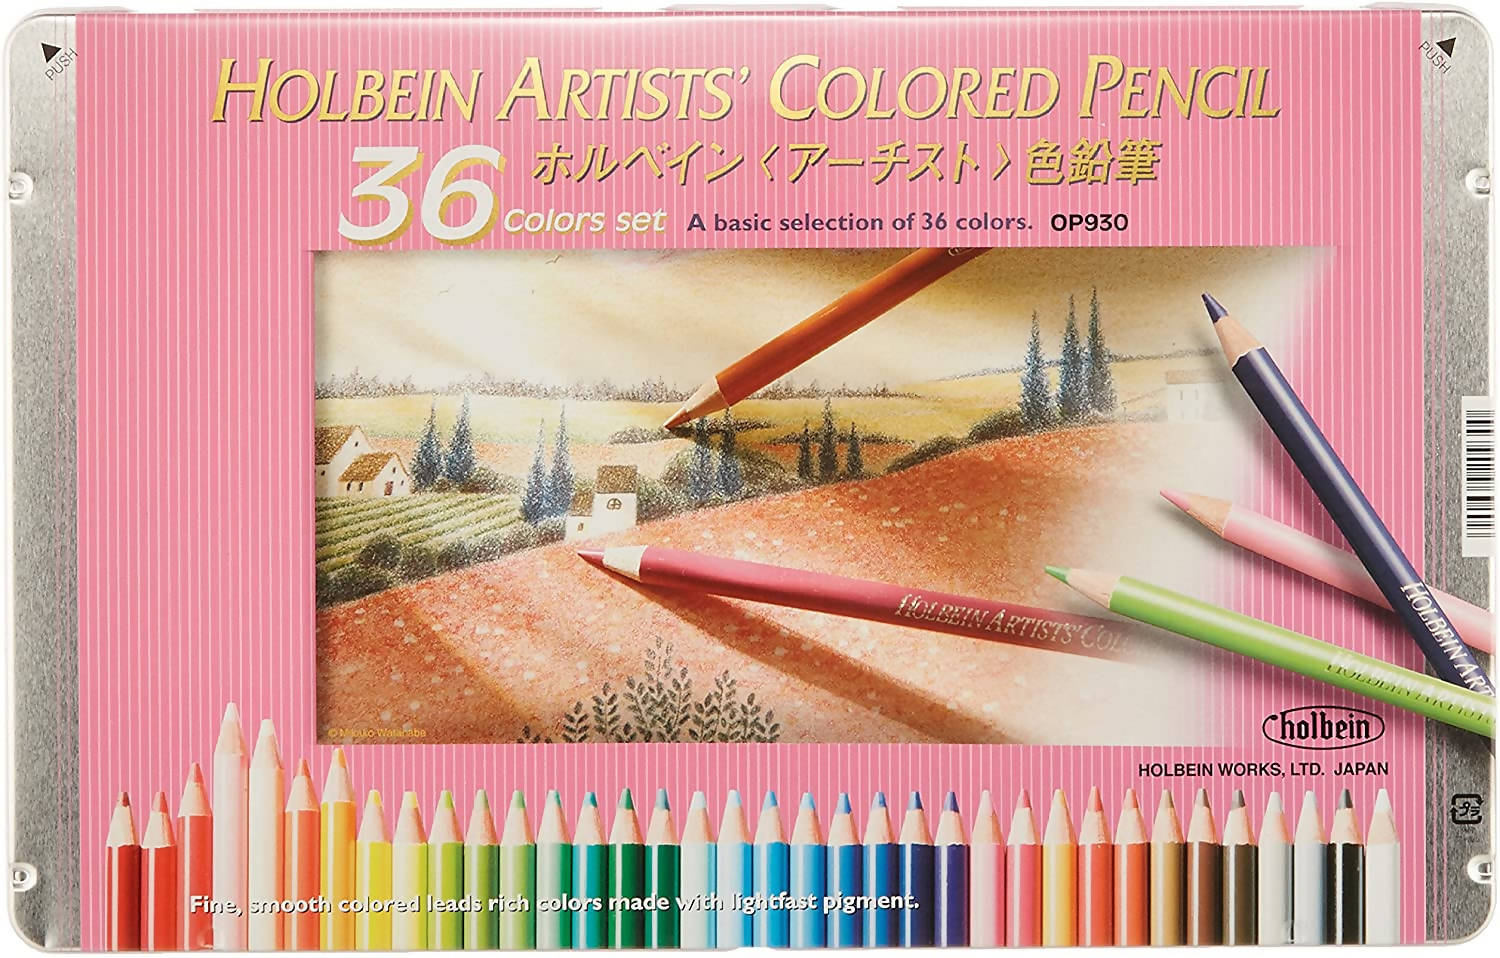 Gallery Art Pencil Set